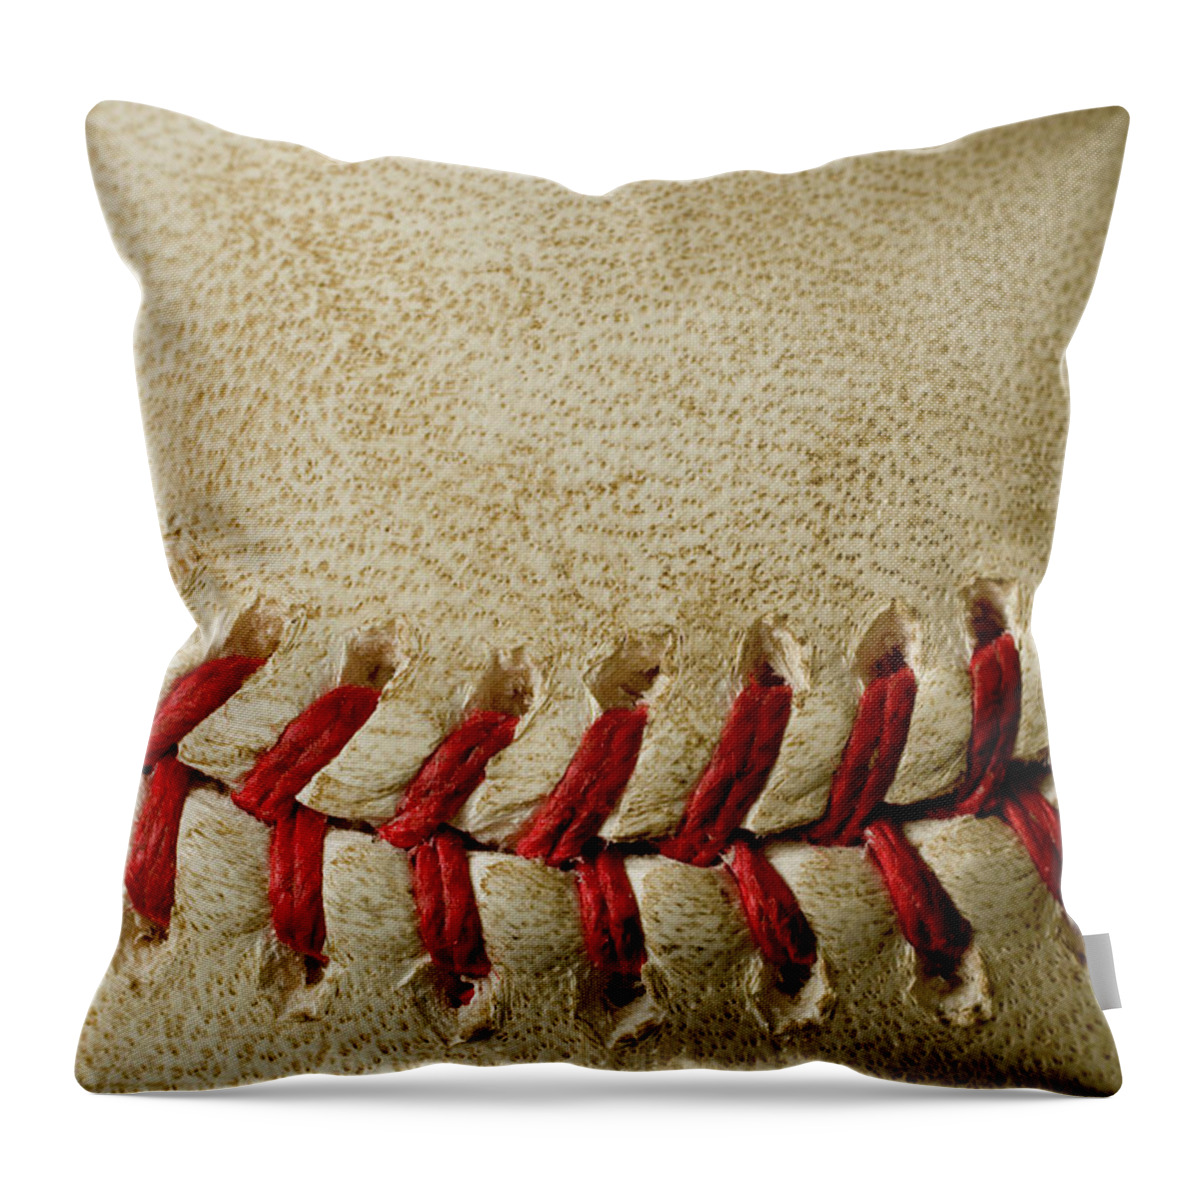 Team Sport Throw Pillow featuring the photograph Baseball Smile by Ranplett